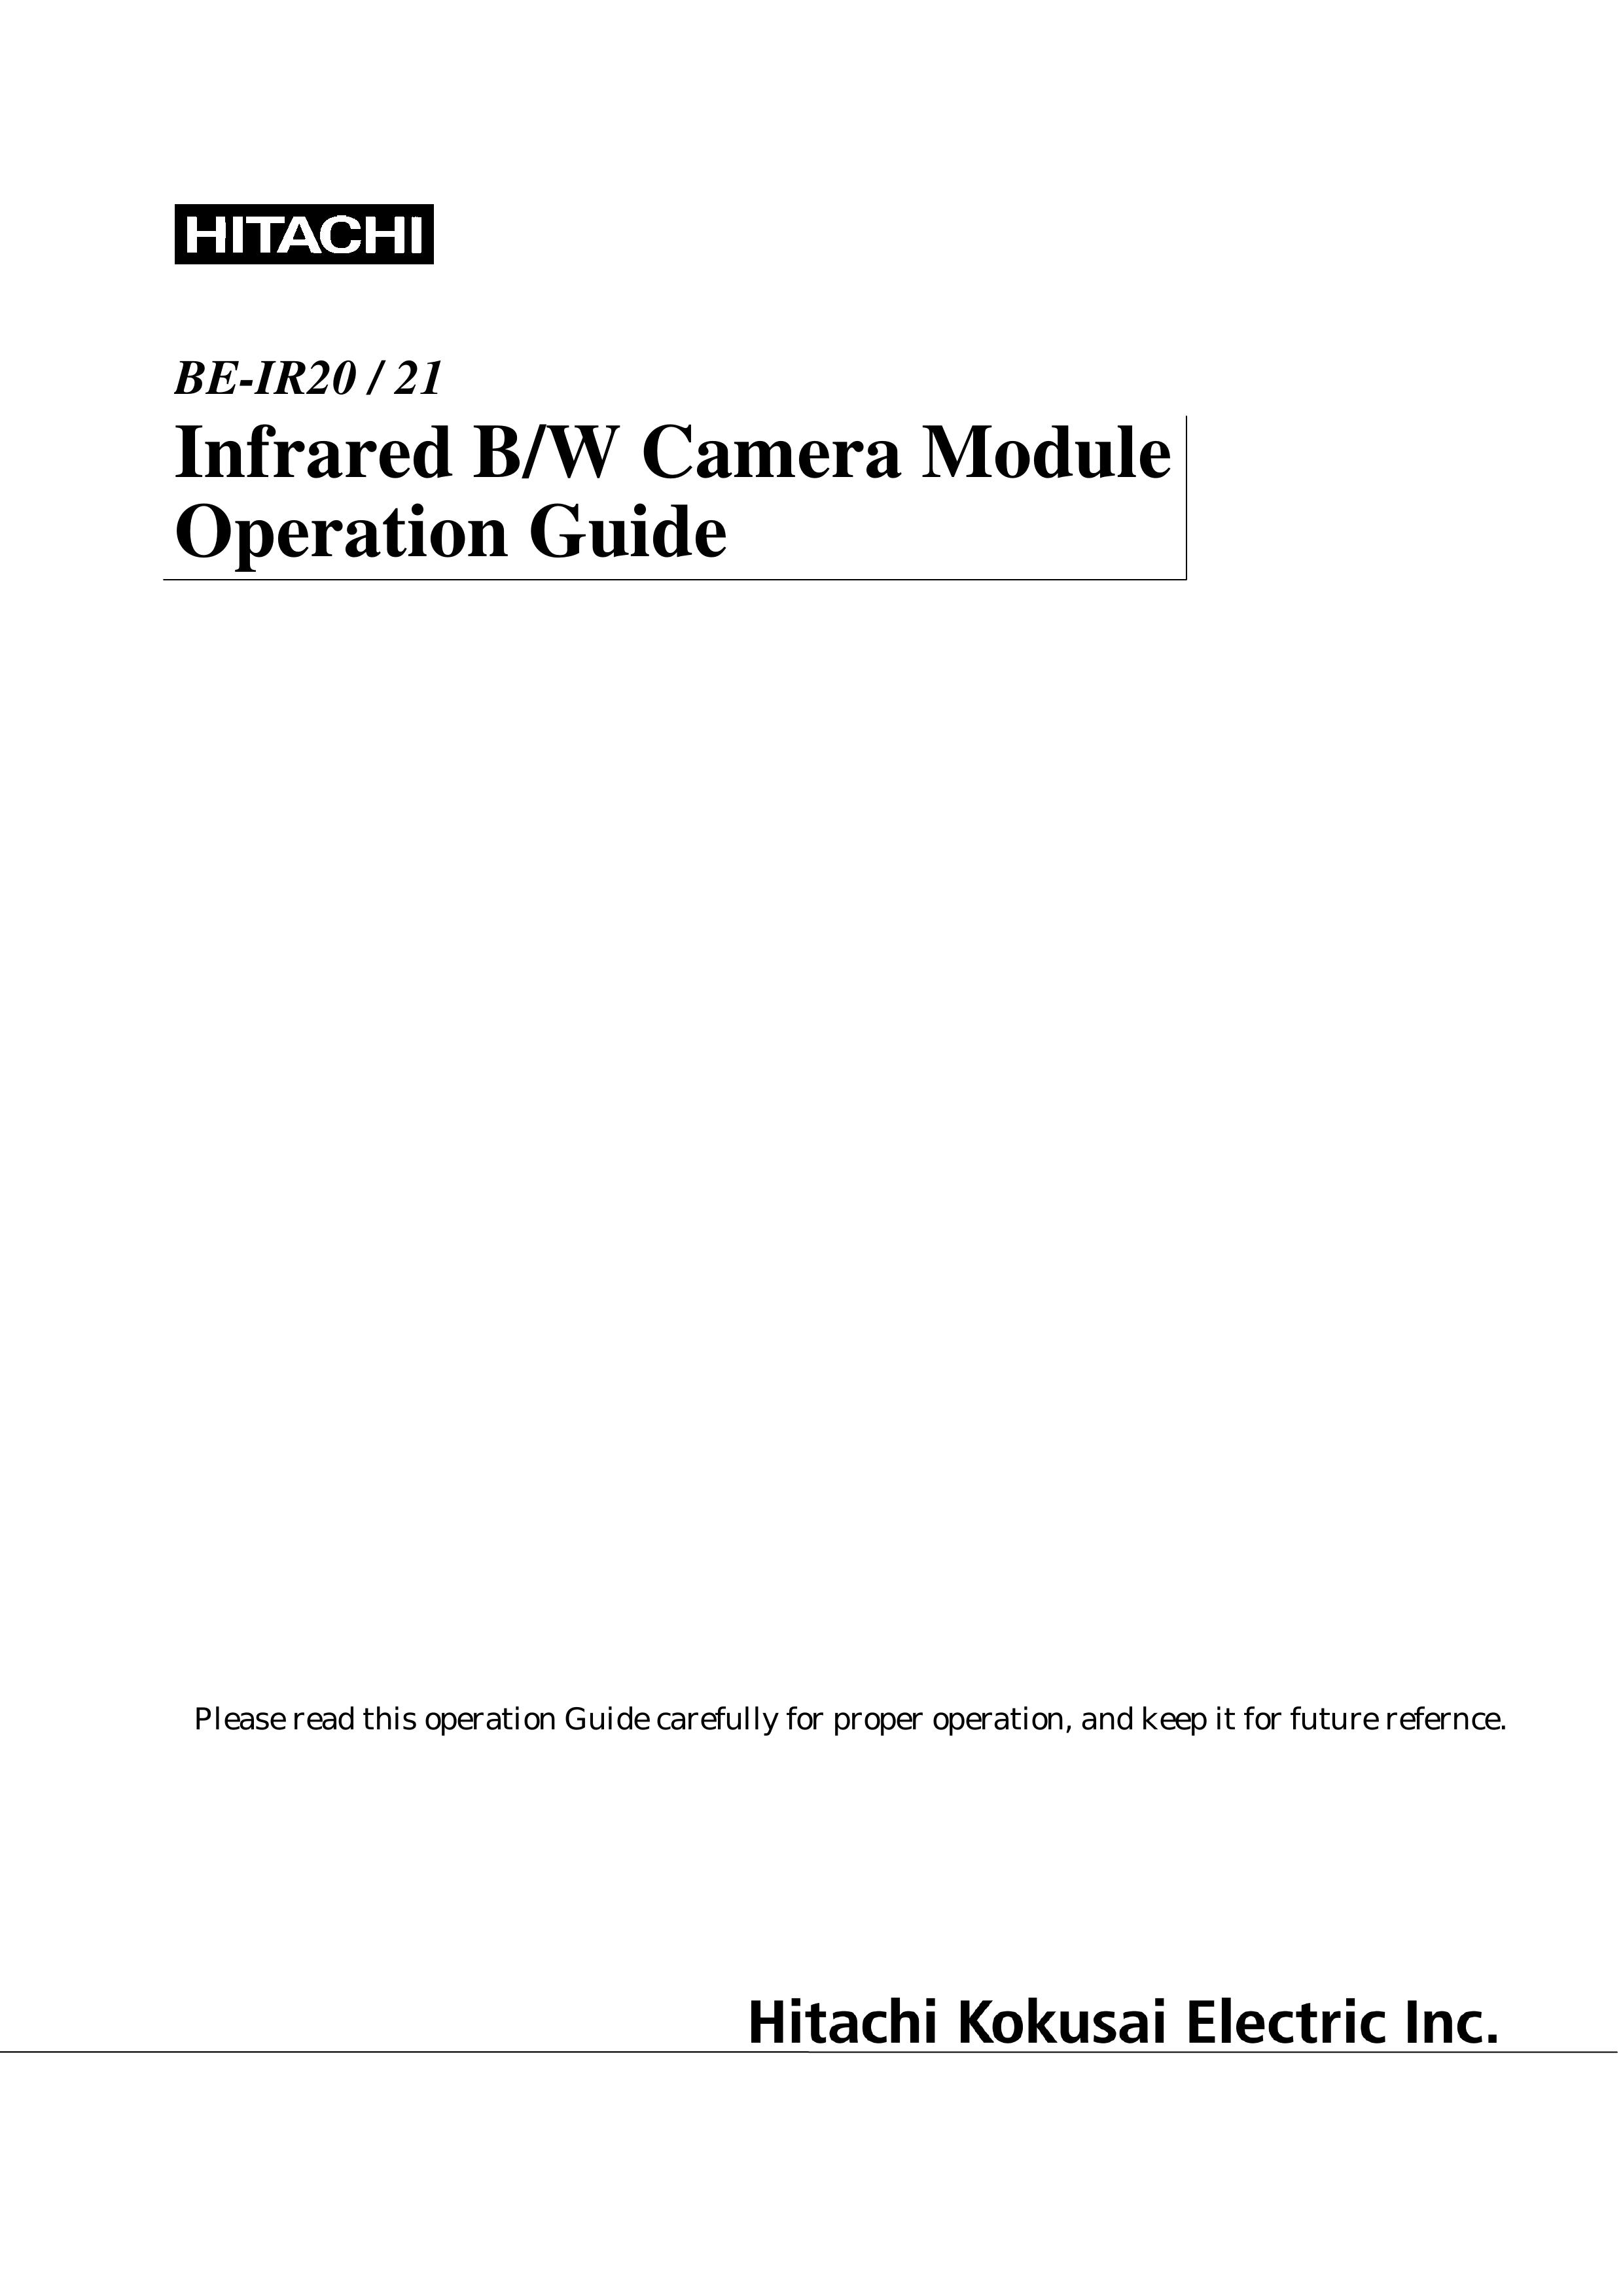 Hitachi BE-IR20 Digital Camera User Manual